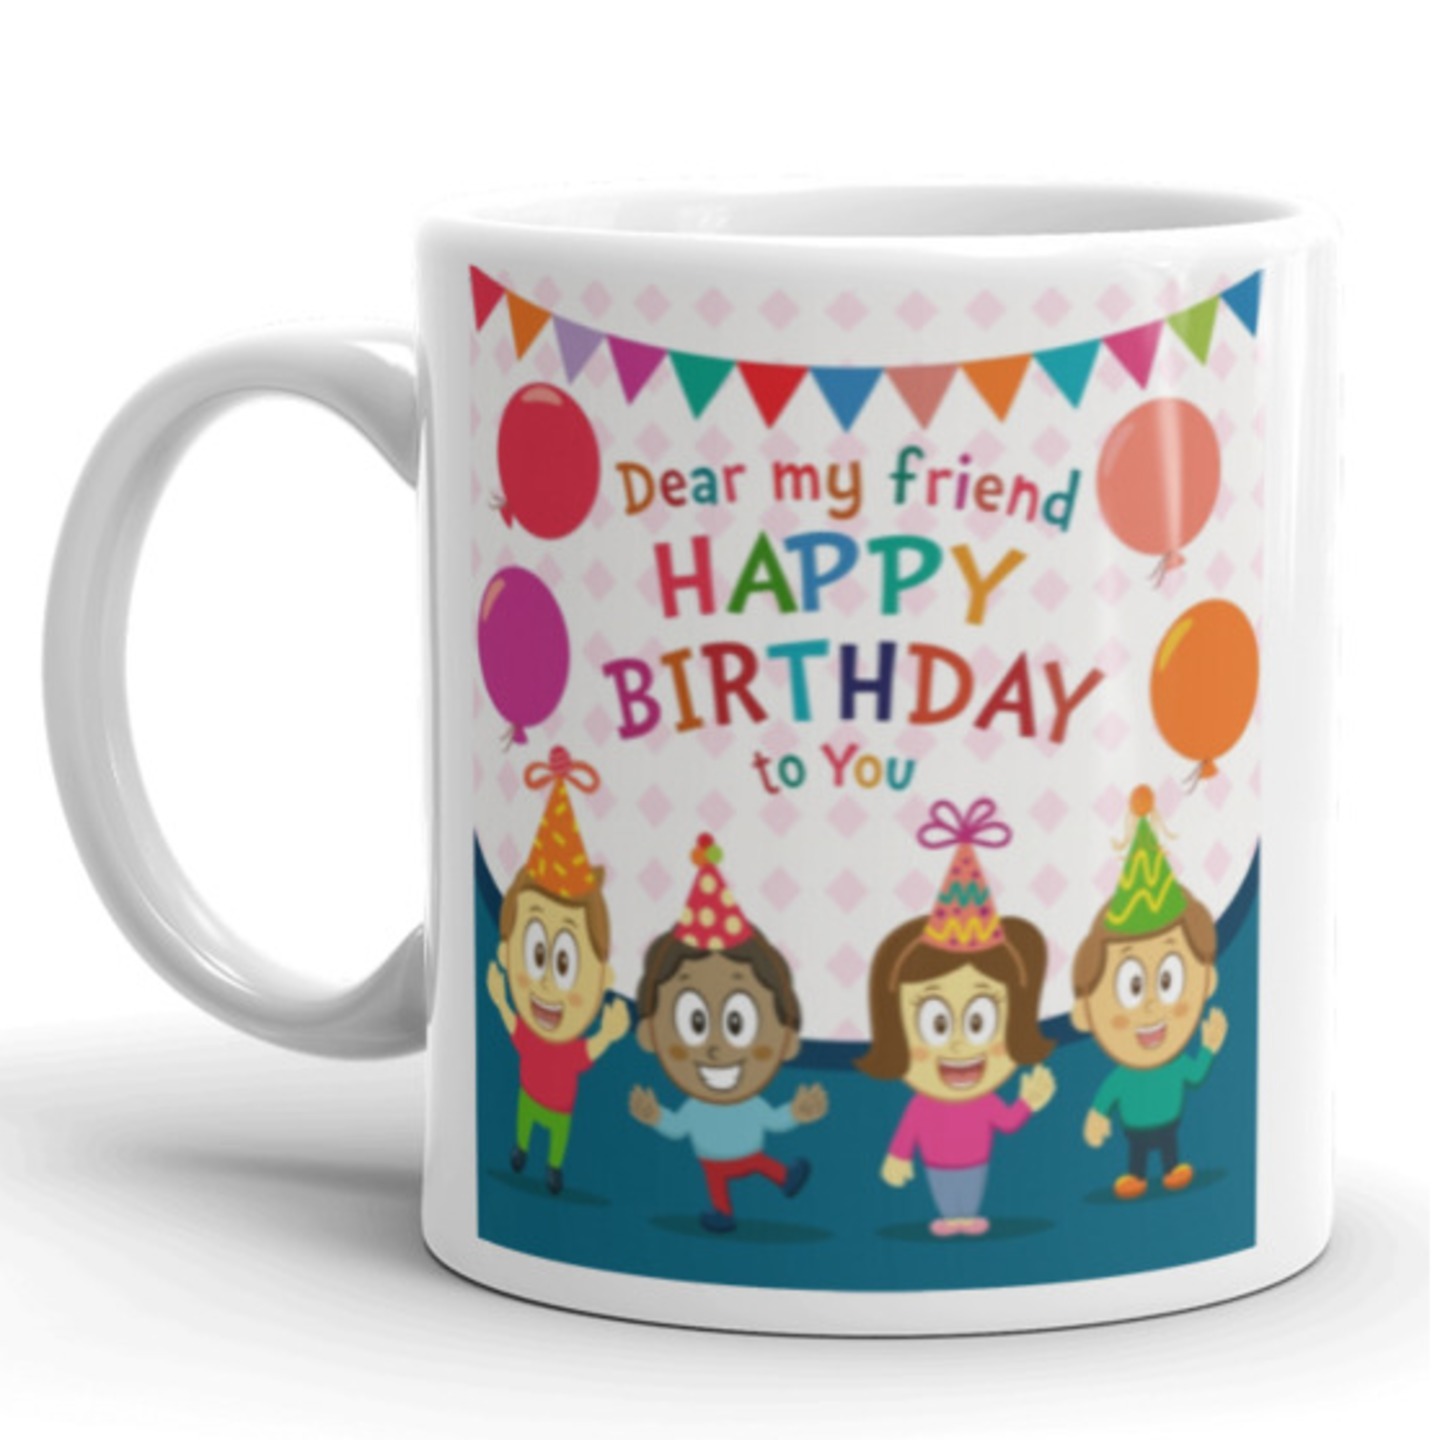 Ceramic Mug - Dear my friend happy birthday to you